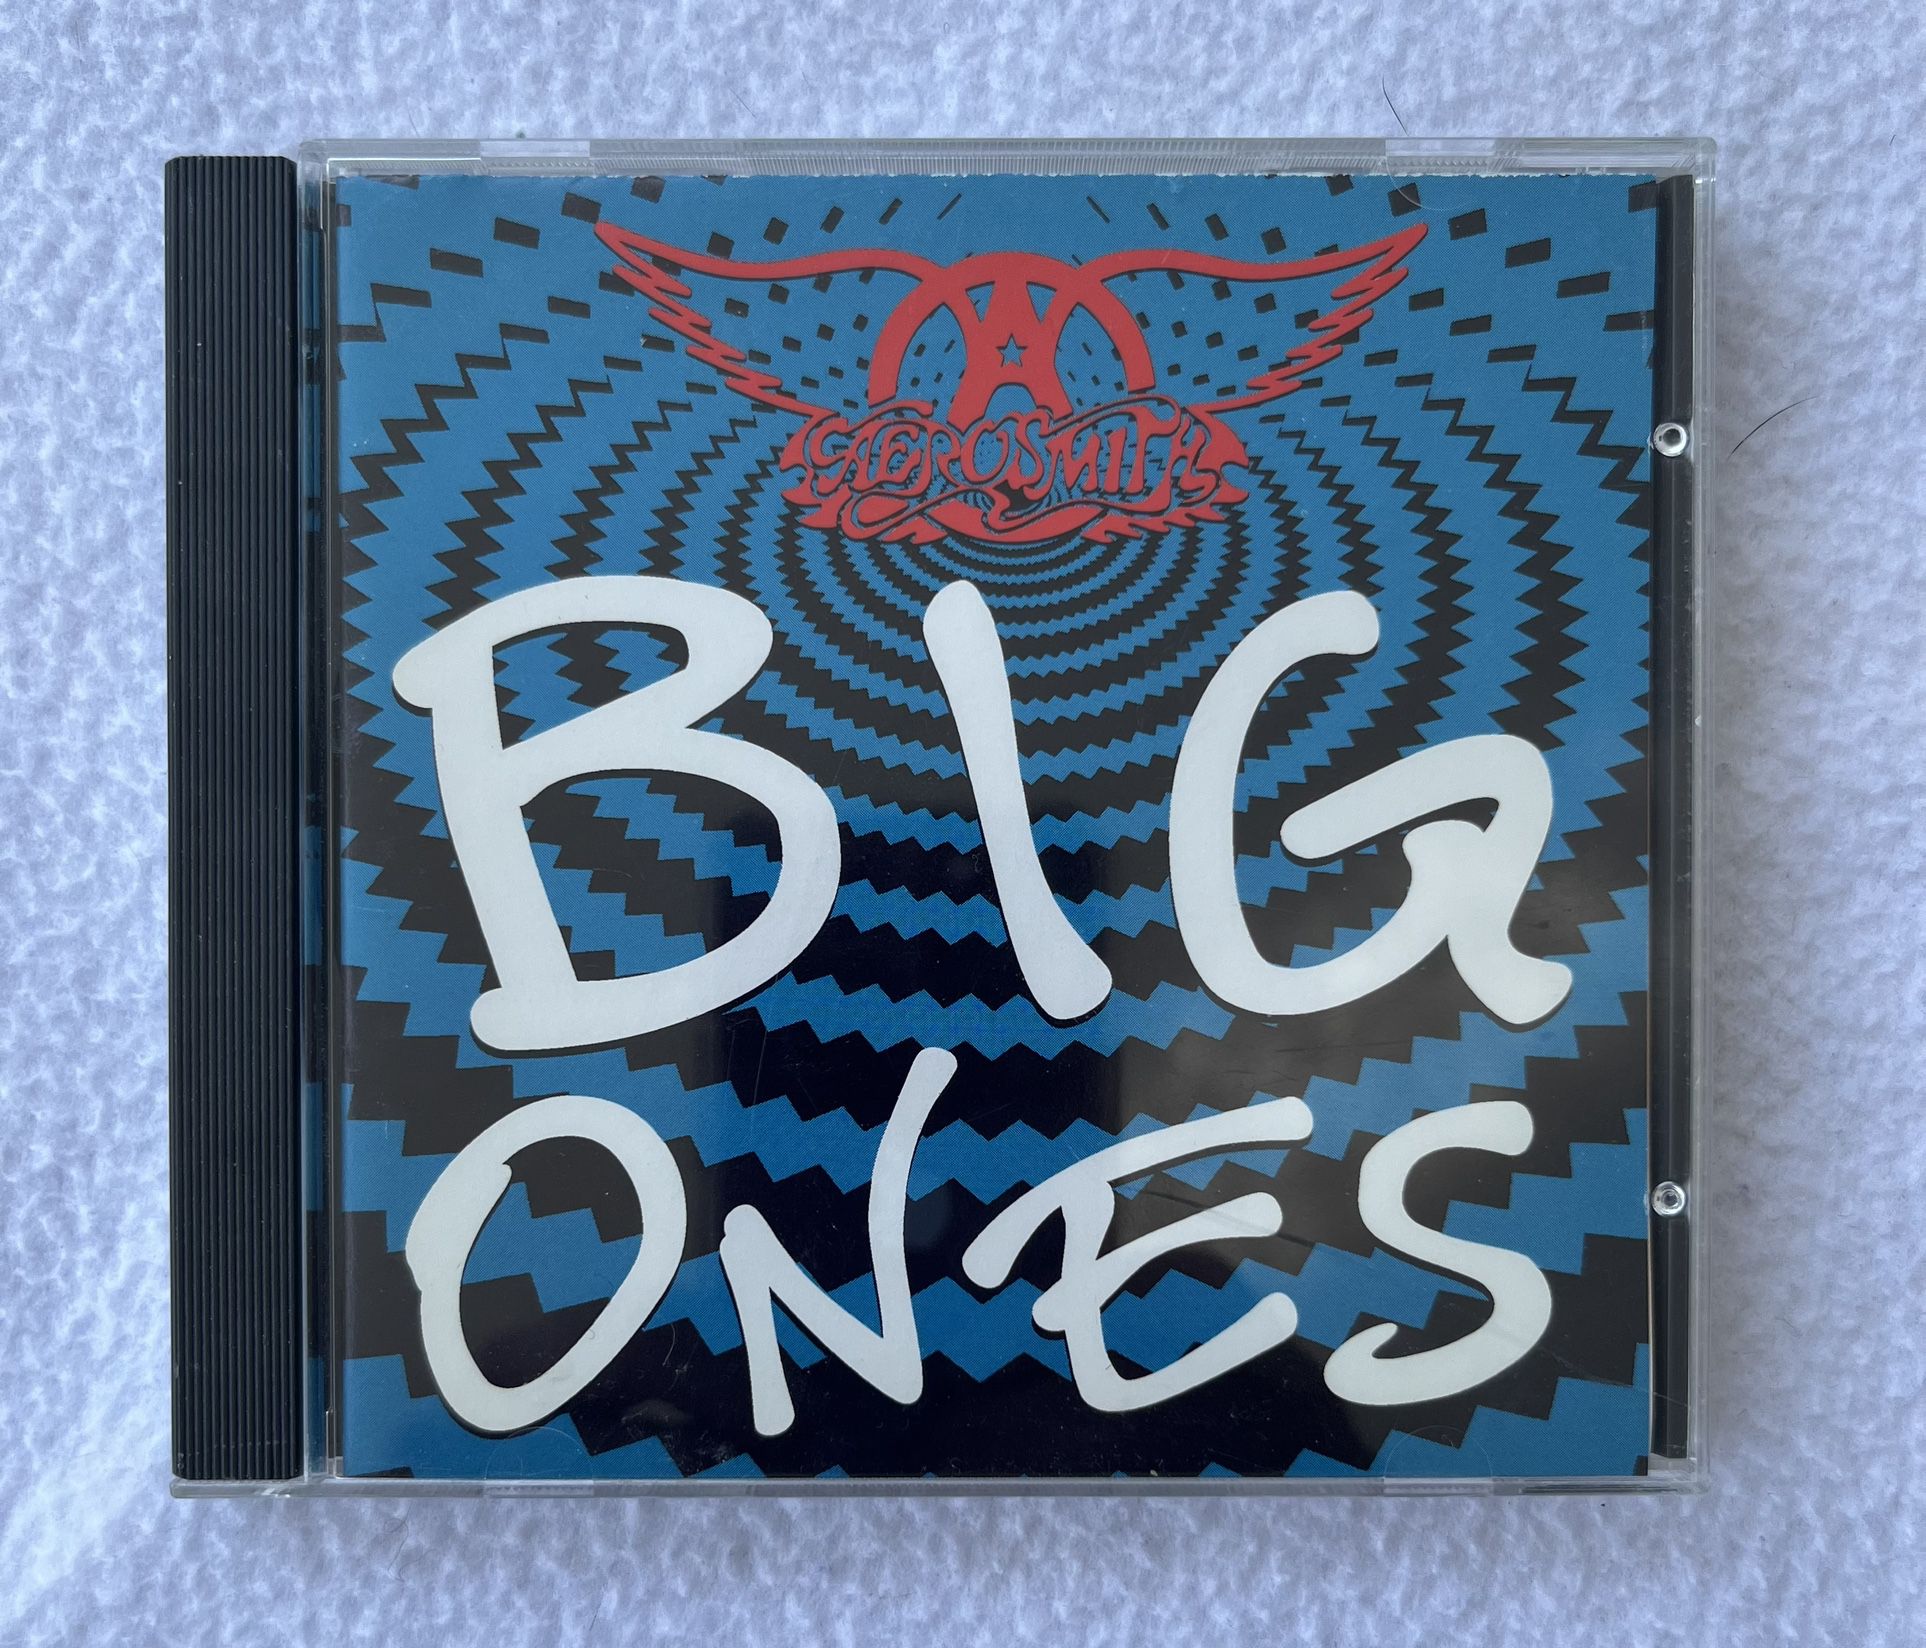 Big Ones by Aerosmith (CD, 1994) Cryin’ Amazing Livin on the edge Crazy